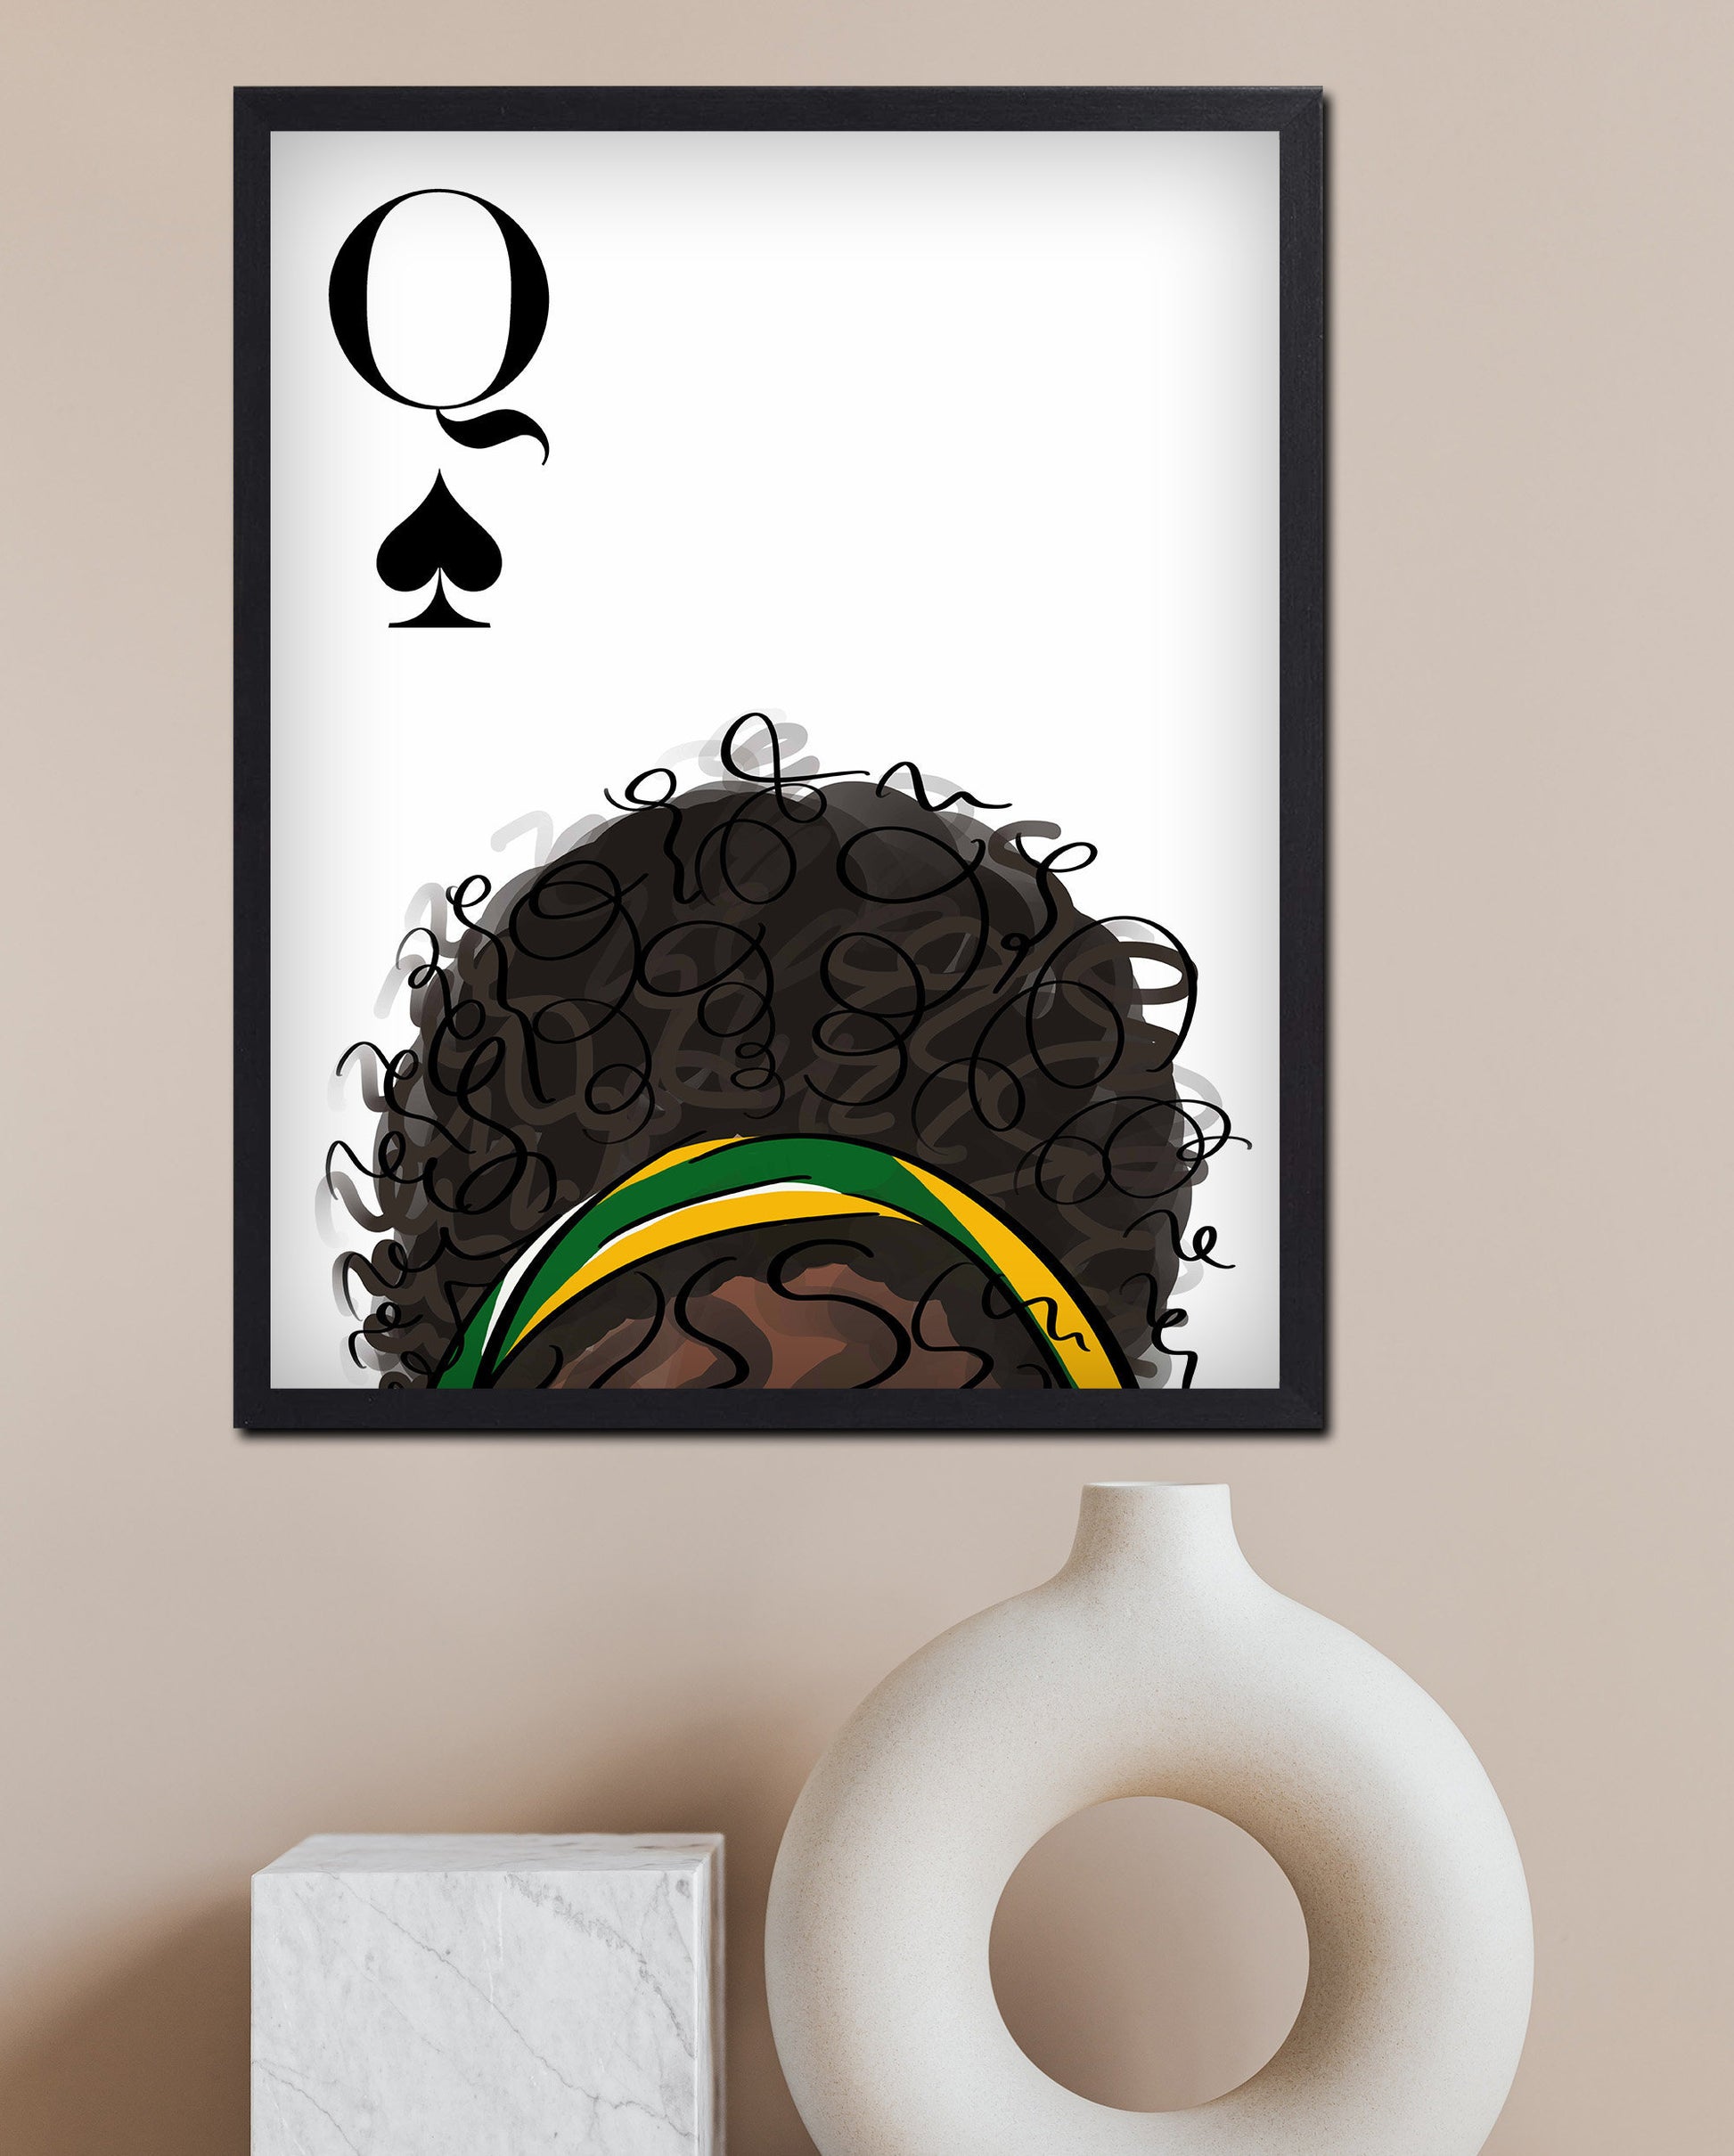 Black Queen Art, Black Queen Wall Art, Black Queen Poster, African American Art, Amanda Gorman, Black History Month, Black Lives Matter